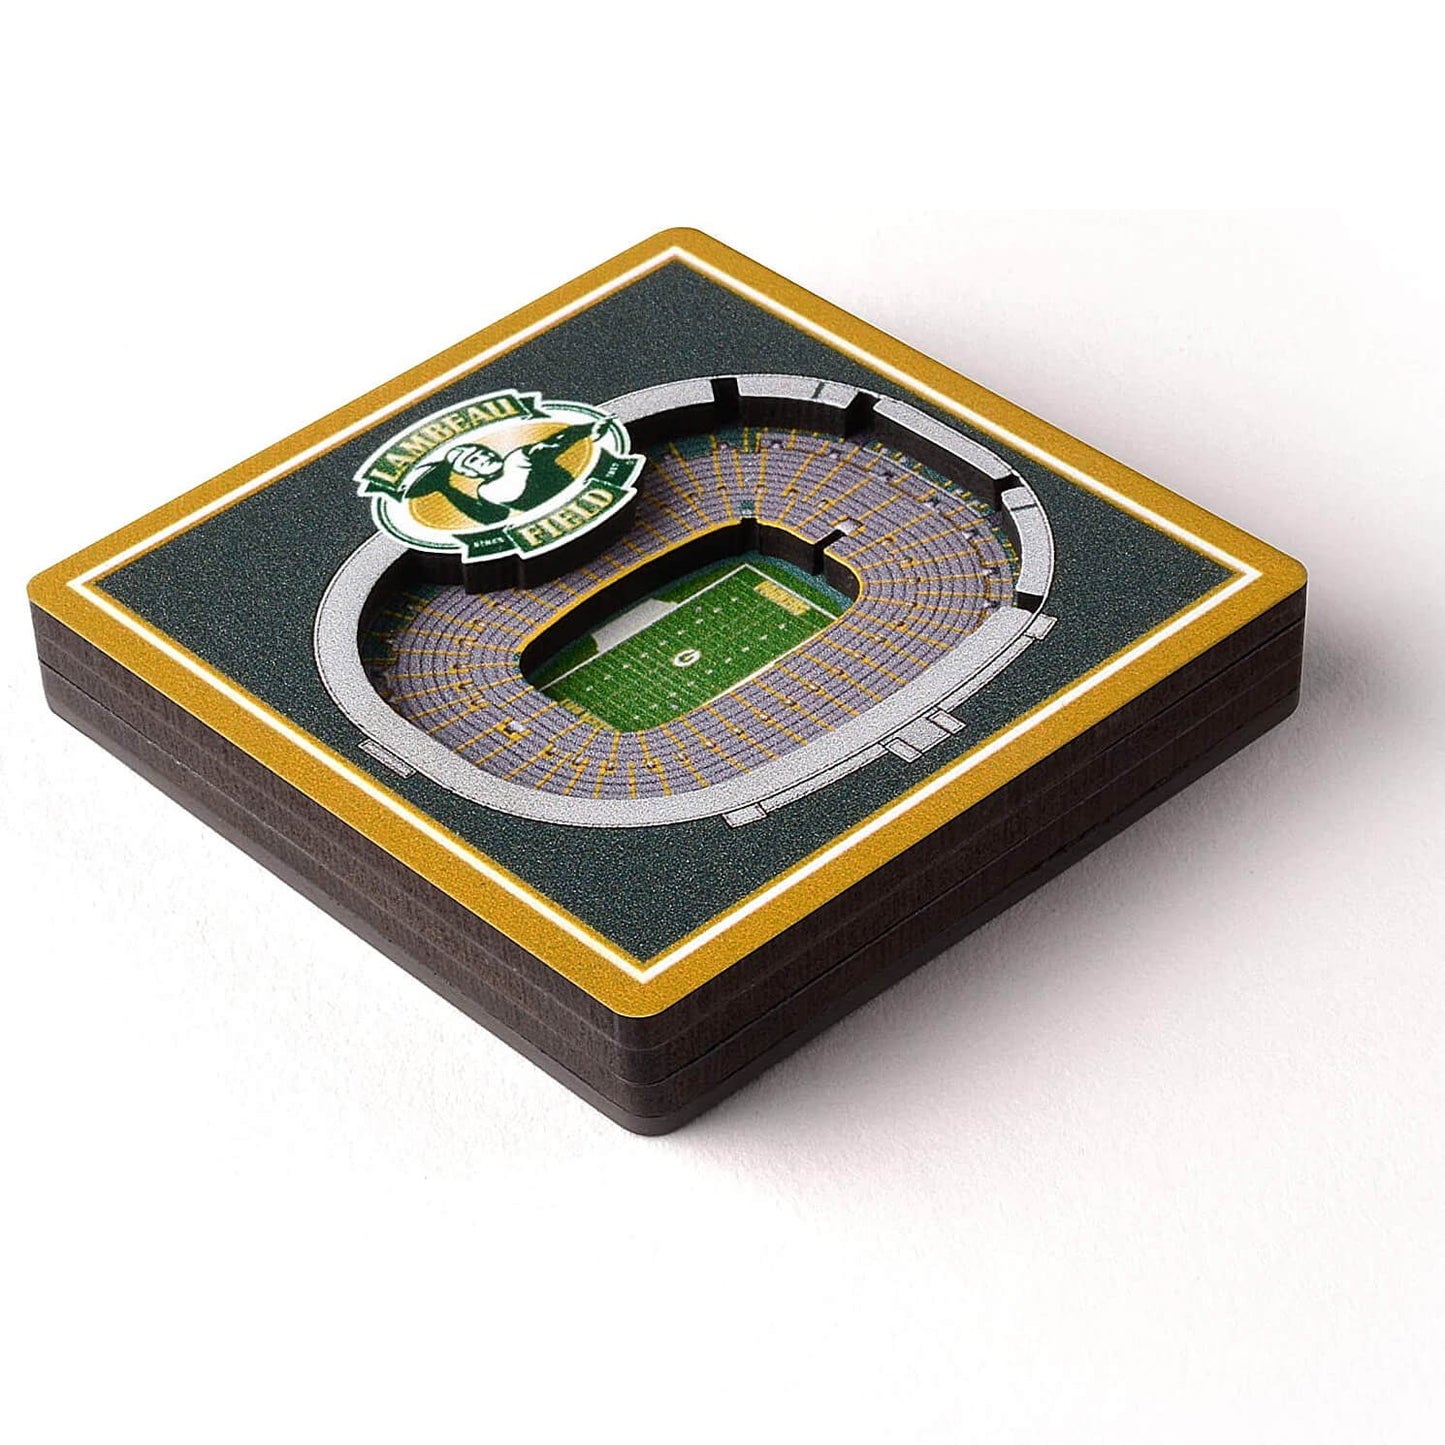 Youthefan Nfl 3D Stadiumview Magnet Green Bay Packers (7Cm X 7Cm)